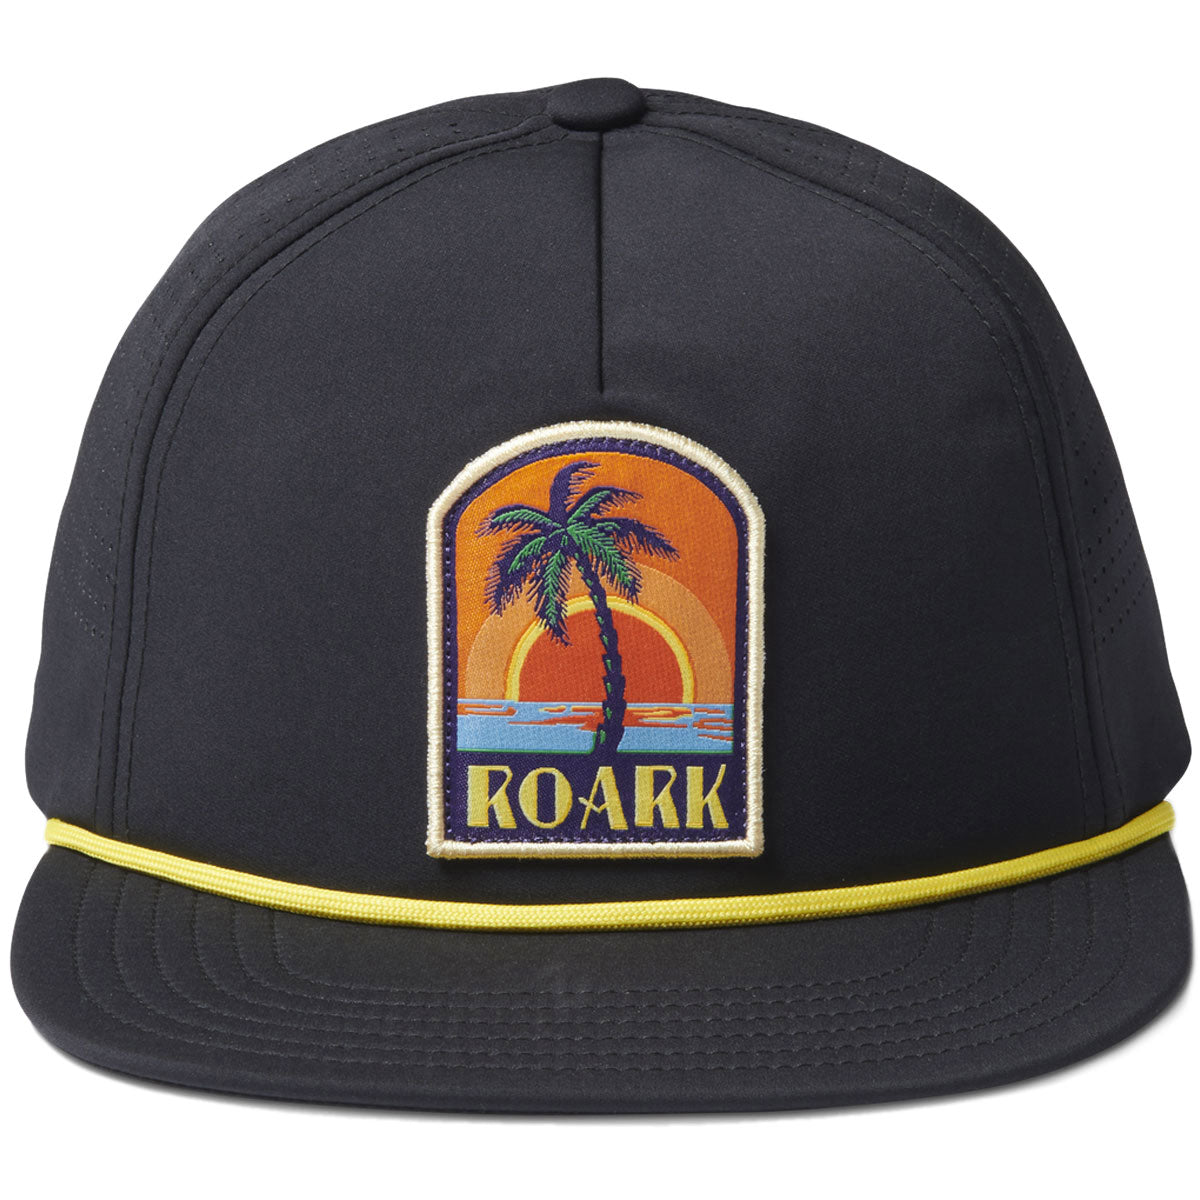 Roark Hybro Hat - Black image 3